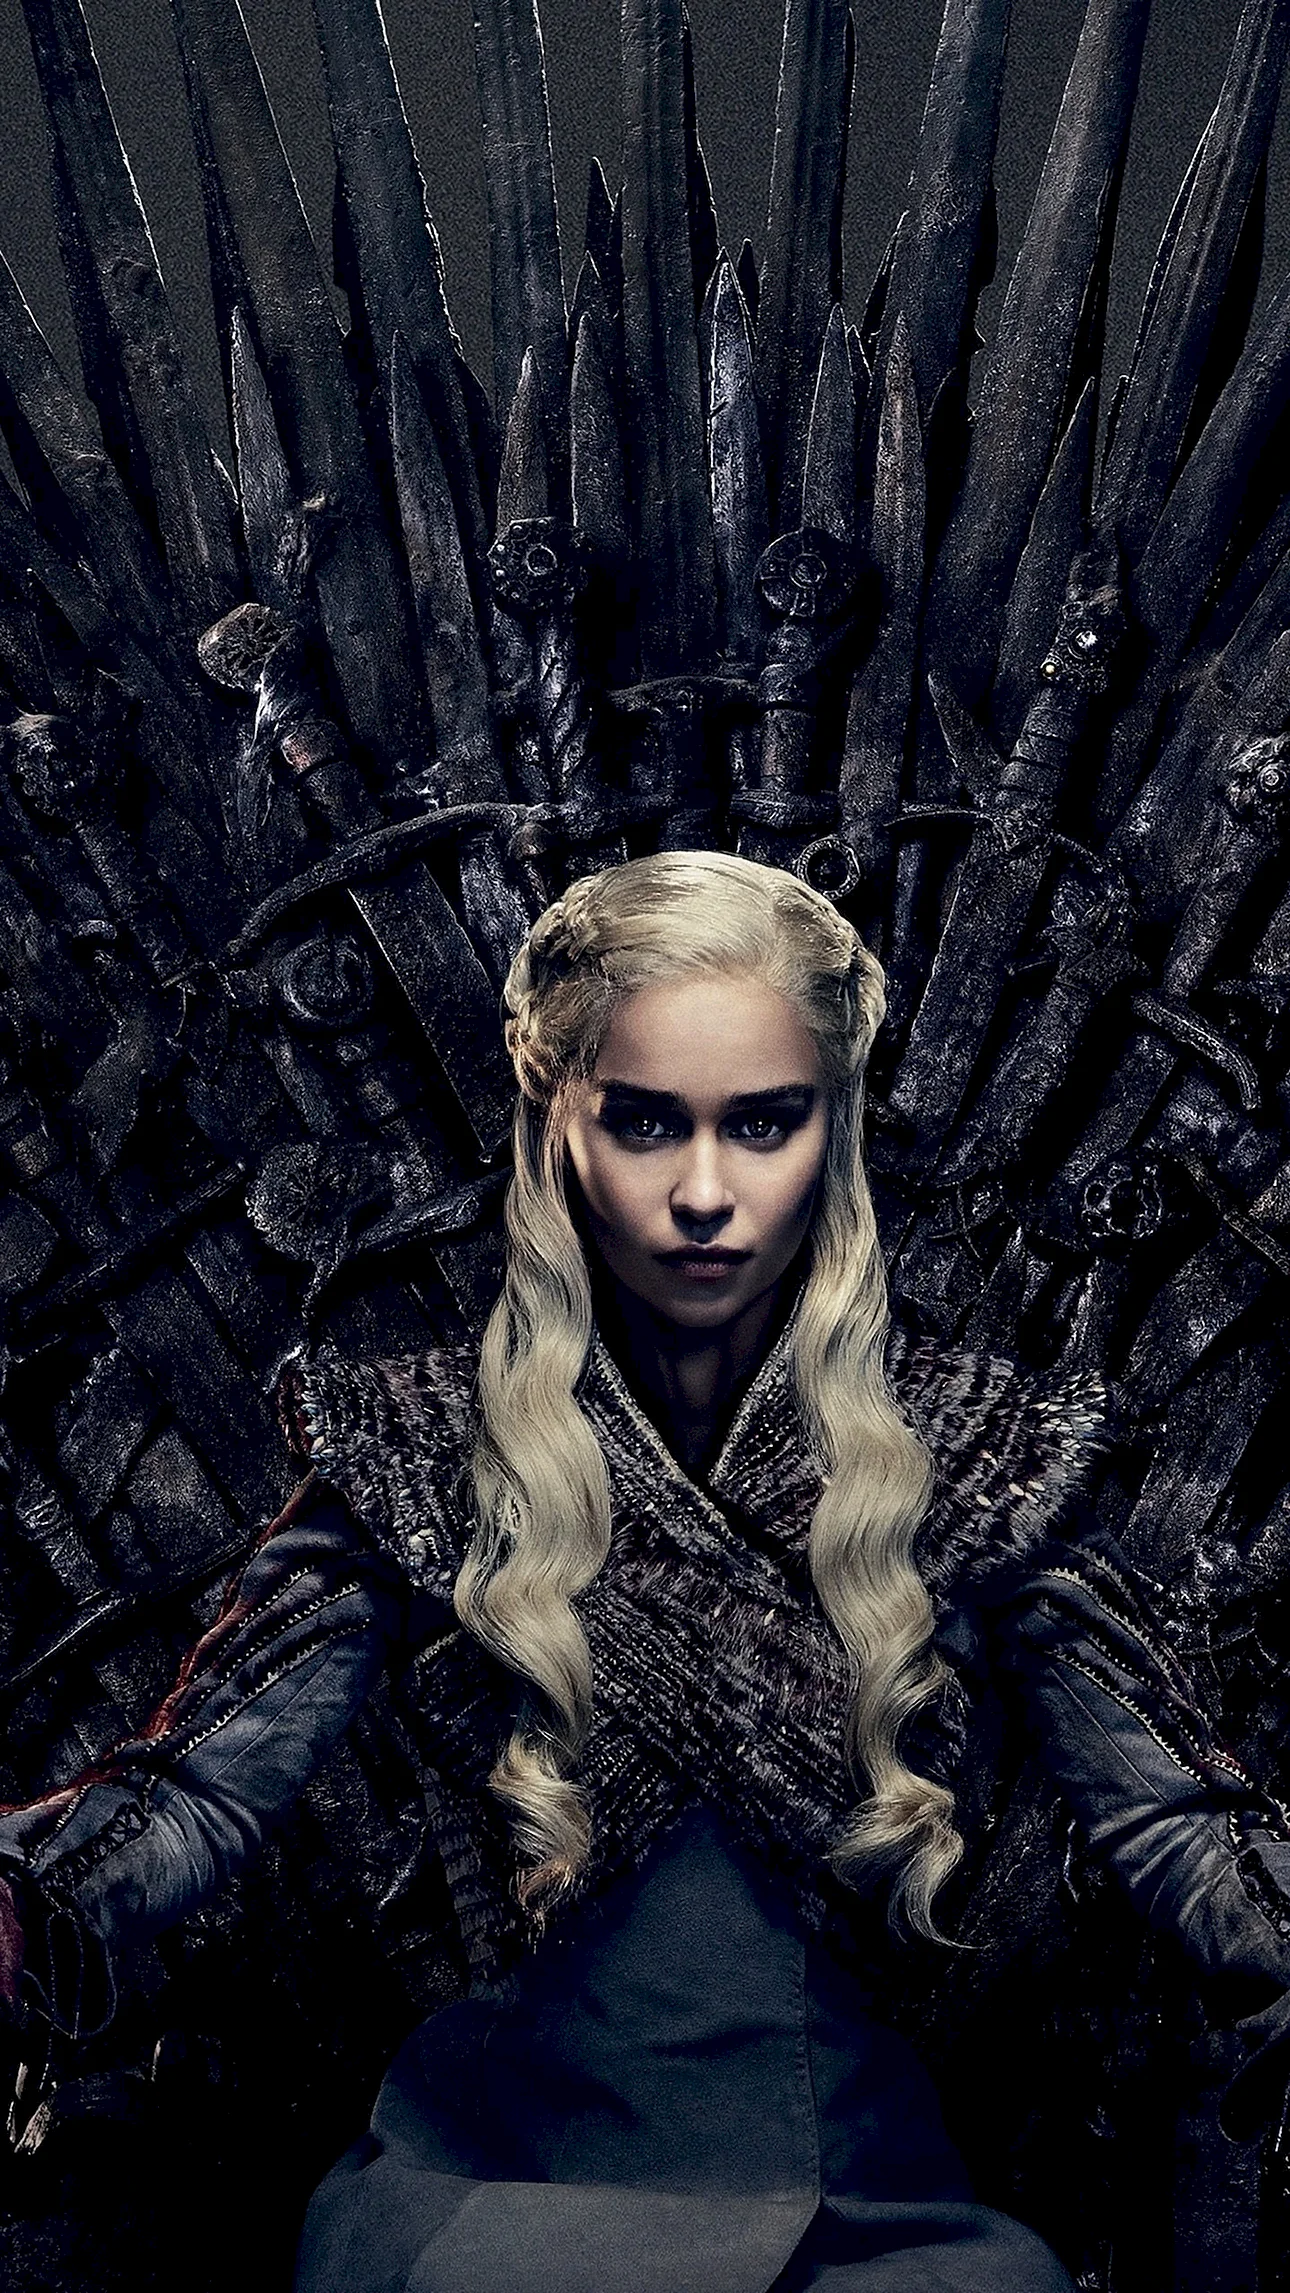 Daenerys Targaryen Wallpaper For iPhone